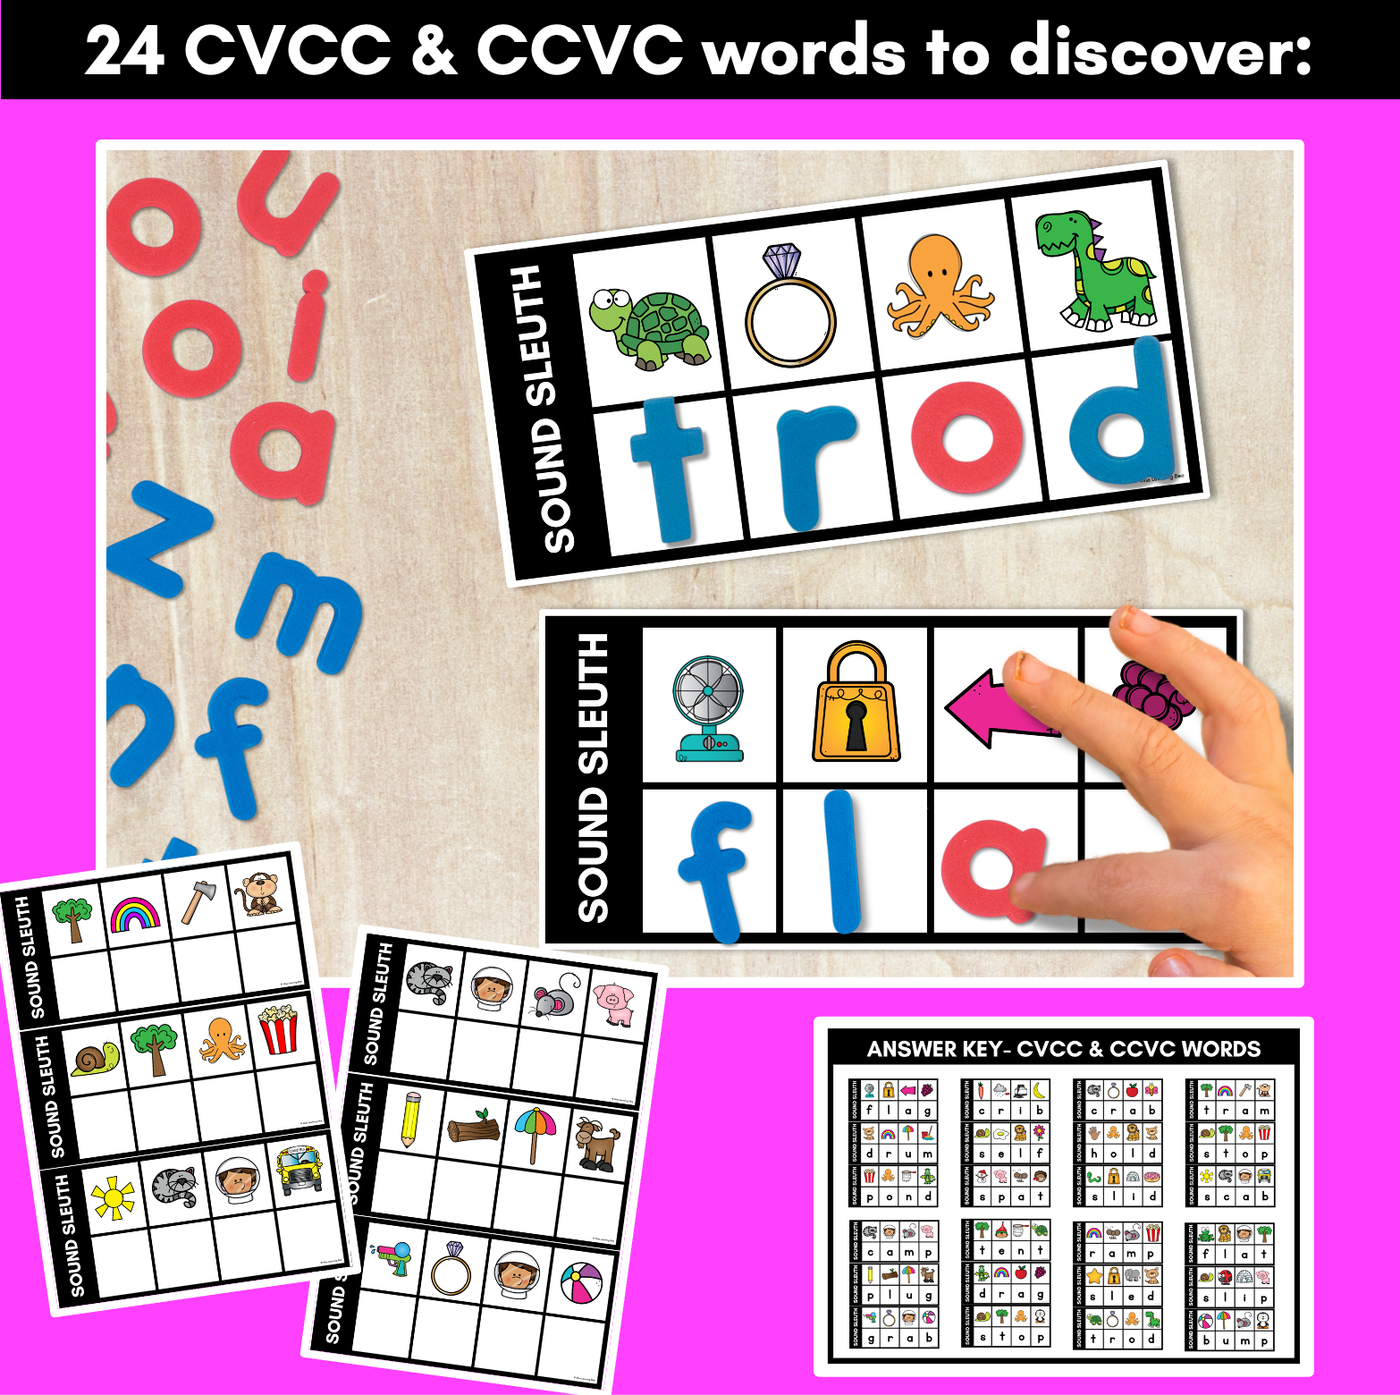 MYSTERY CVC WORD TASK CARDS - Kindergarten Phonics Activity